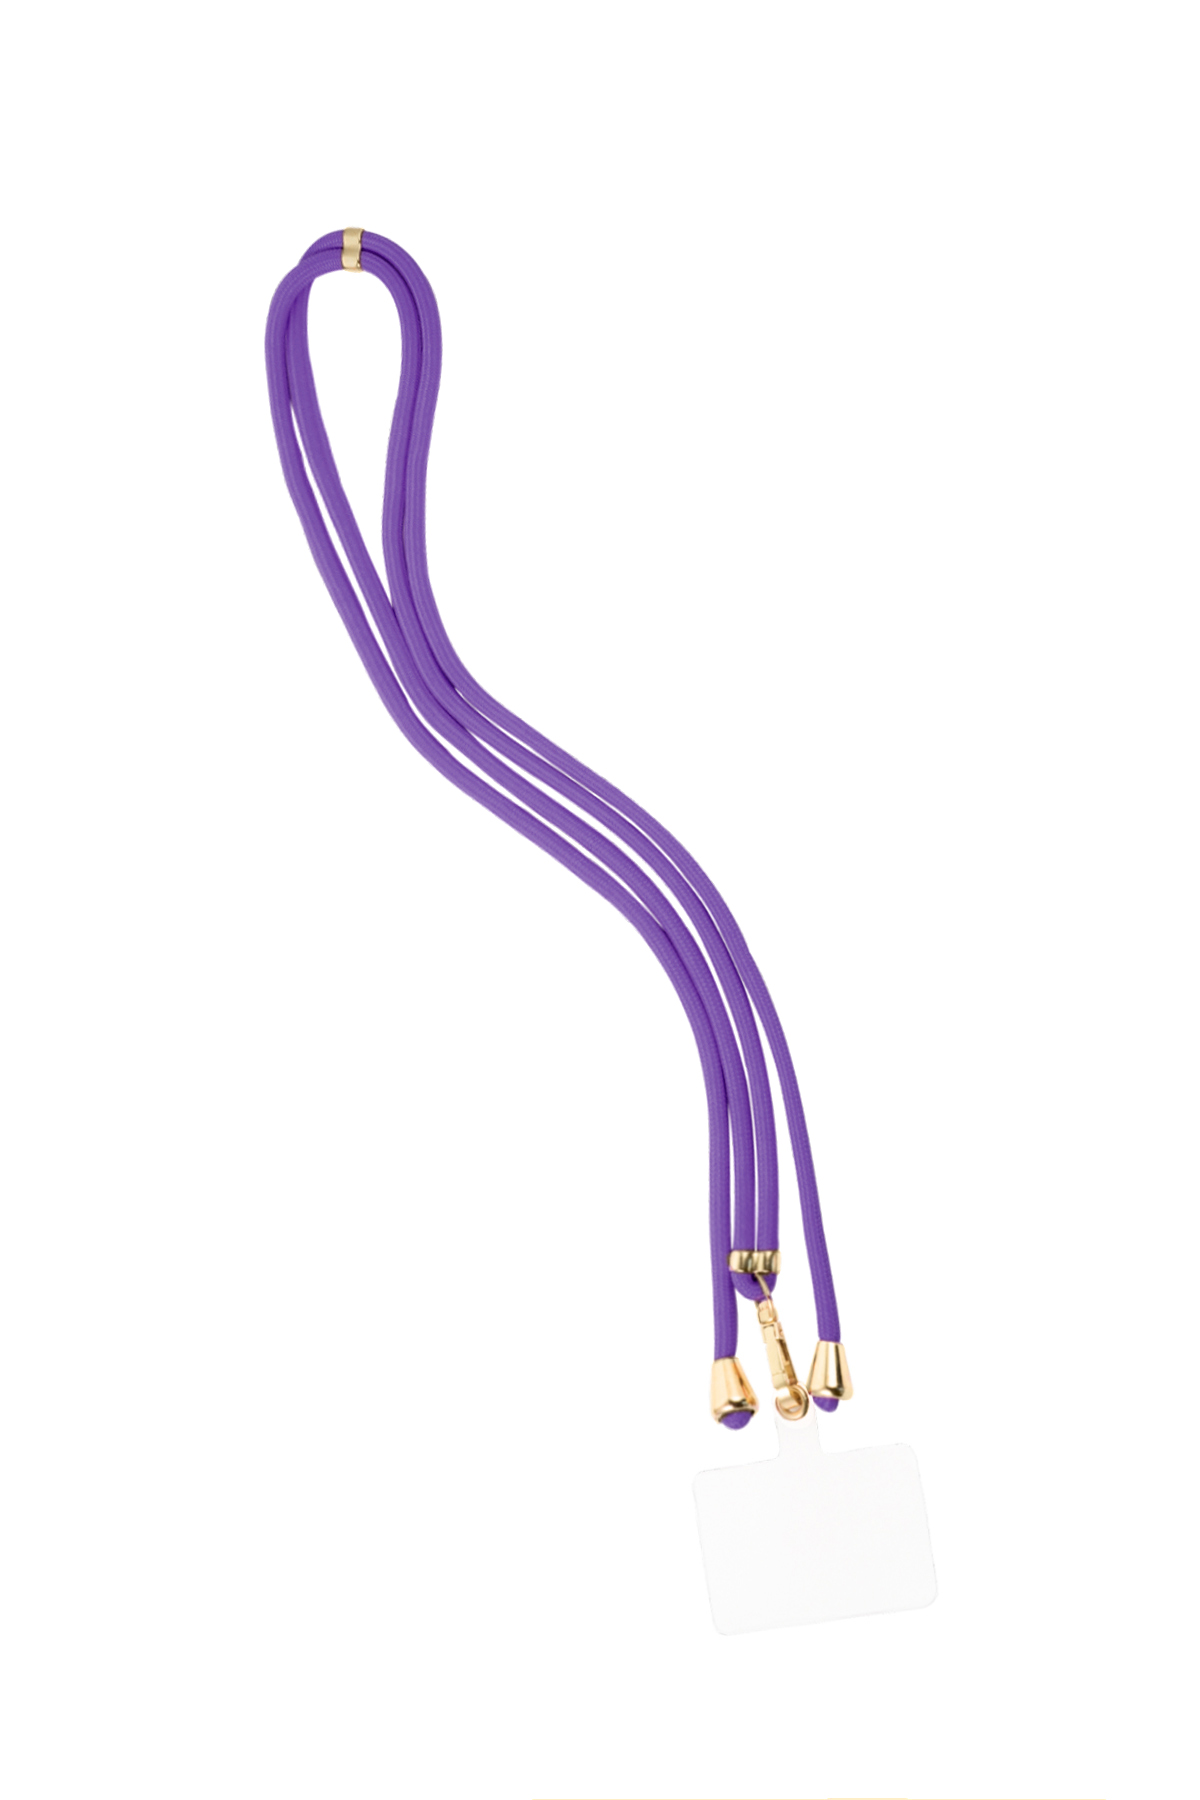 Telephone cord subtle print - purple